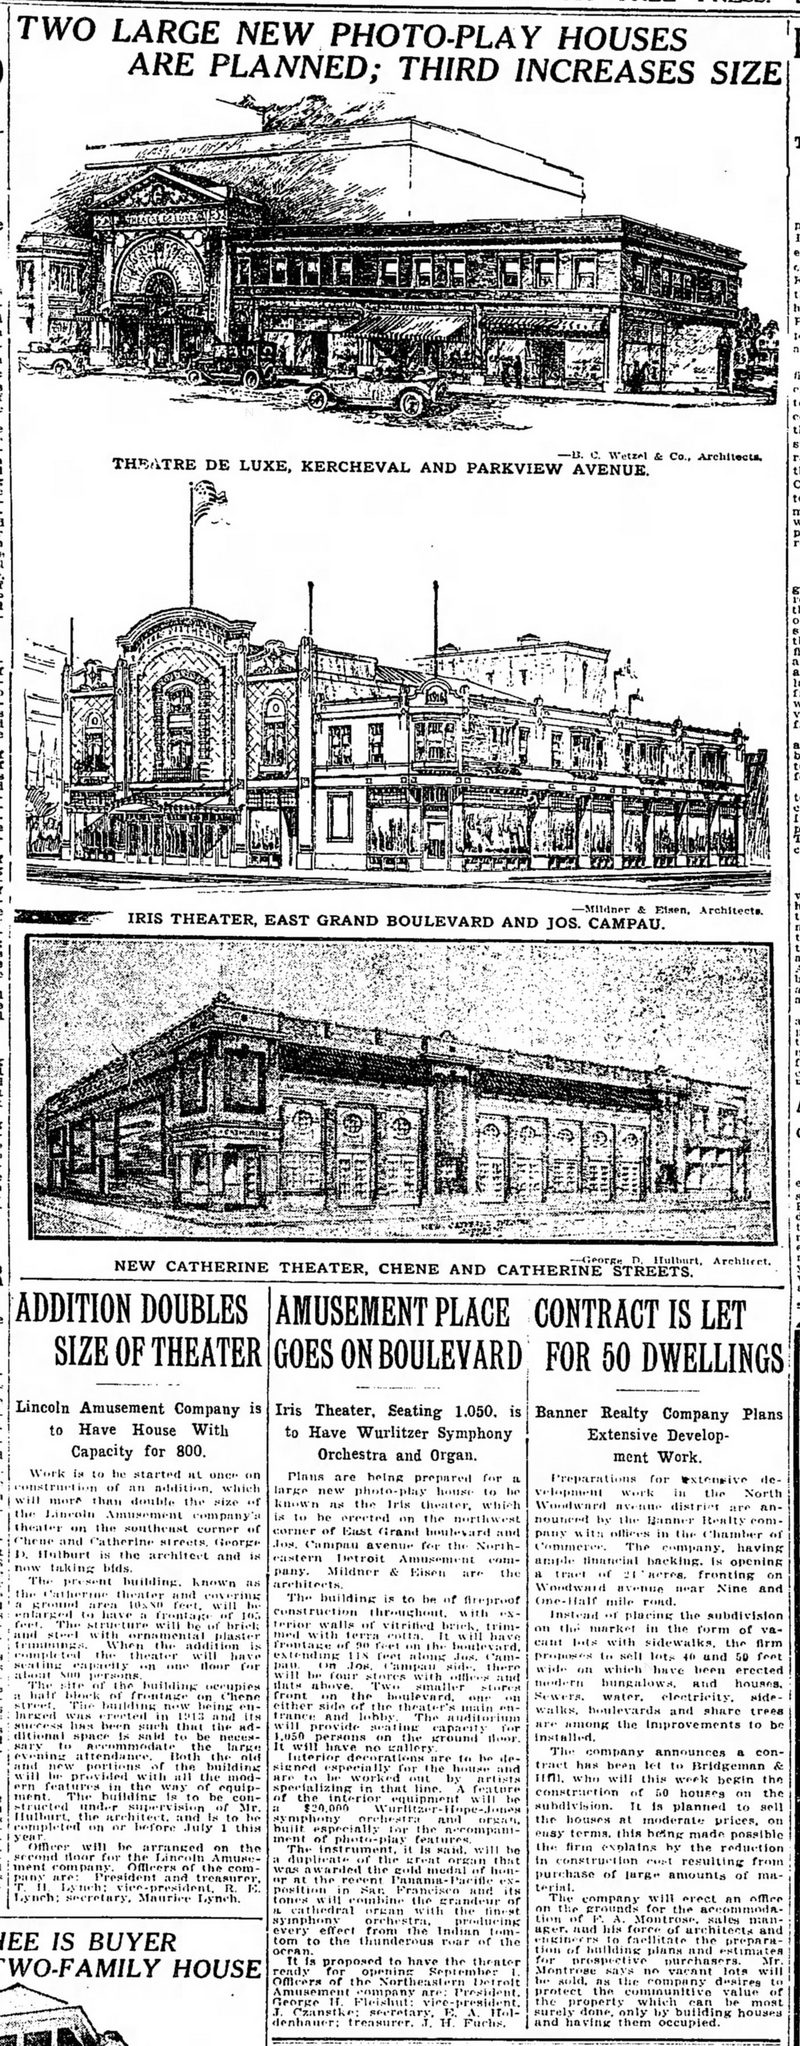 Deluxe Theatre - Mar 19 1916 Article